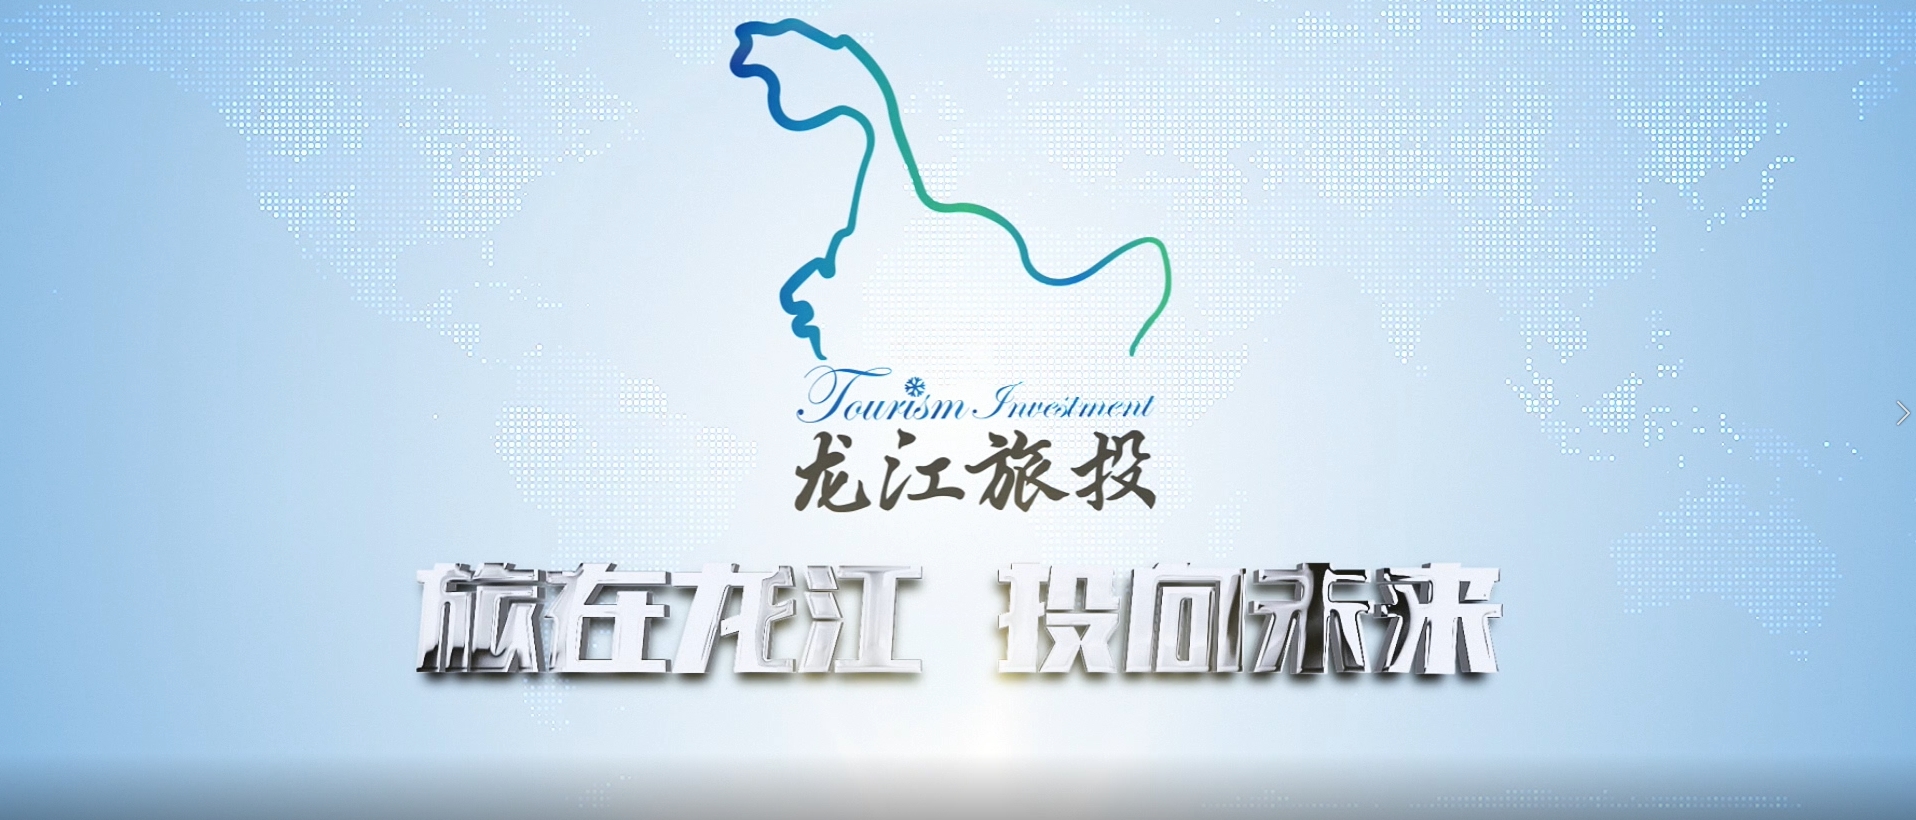 jiangnan江南,(中国)科技公司宣传片2021